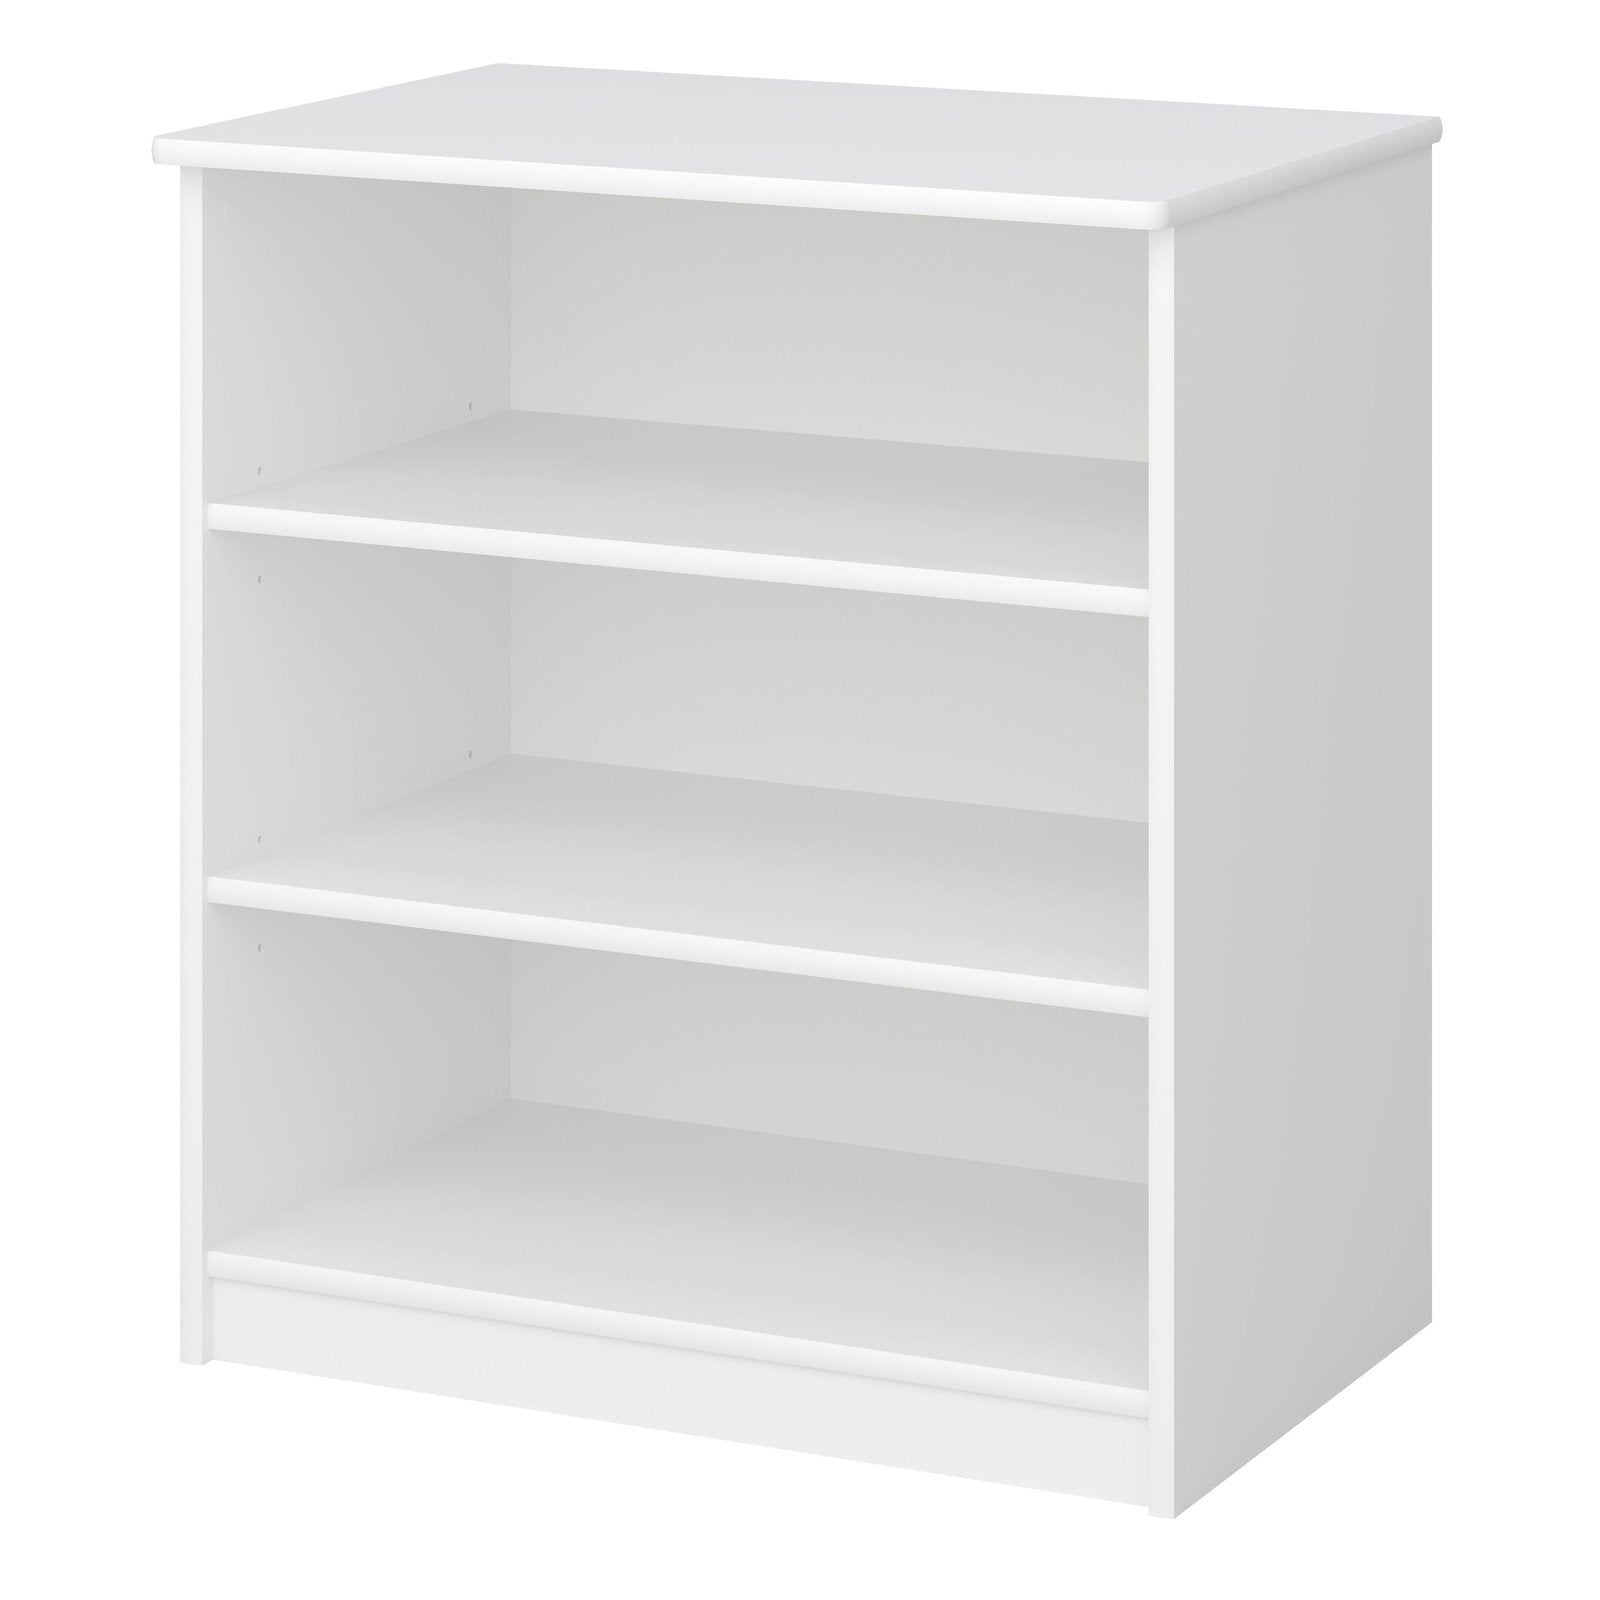 Steens for Kids 3 Shelf Bookcase - White